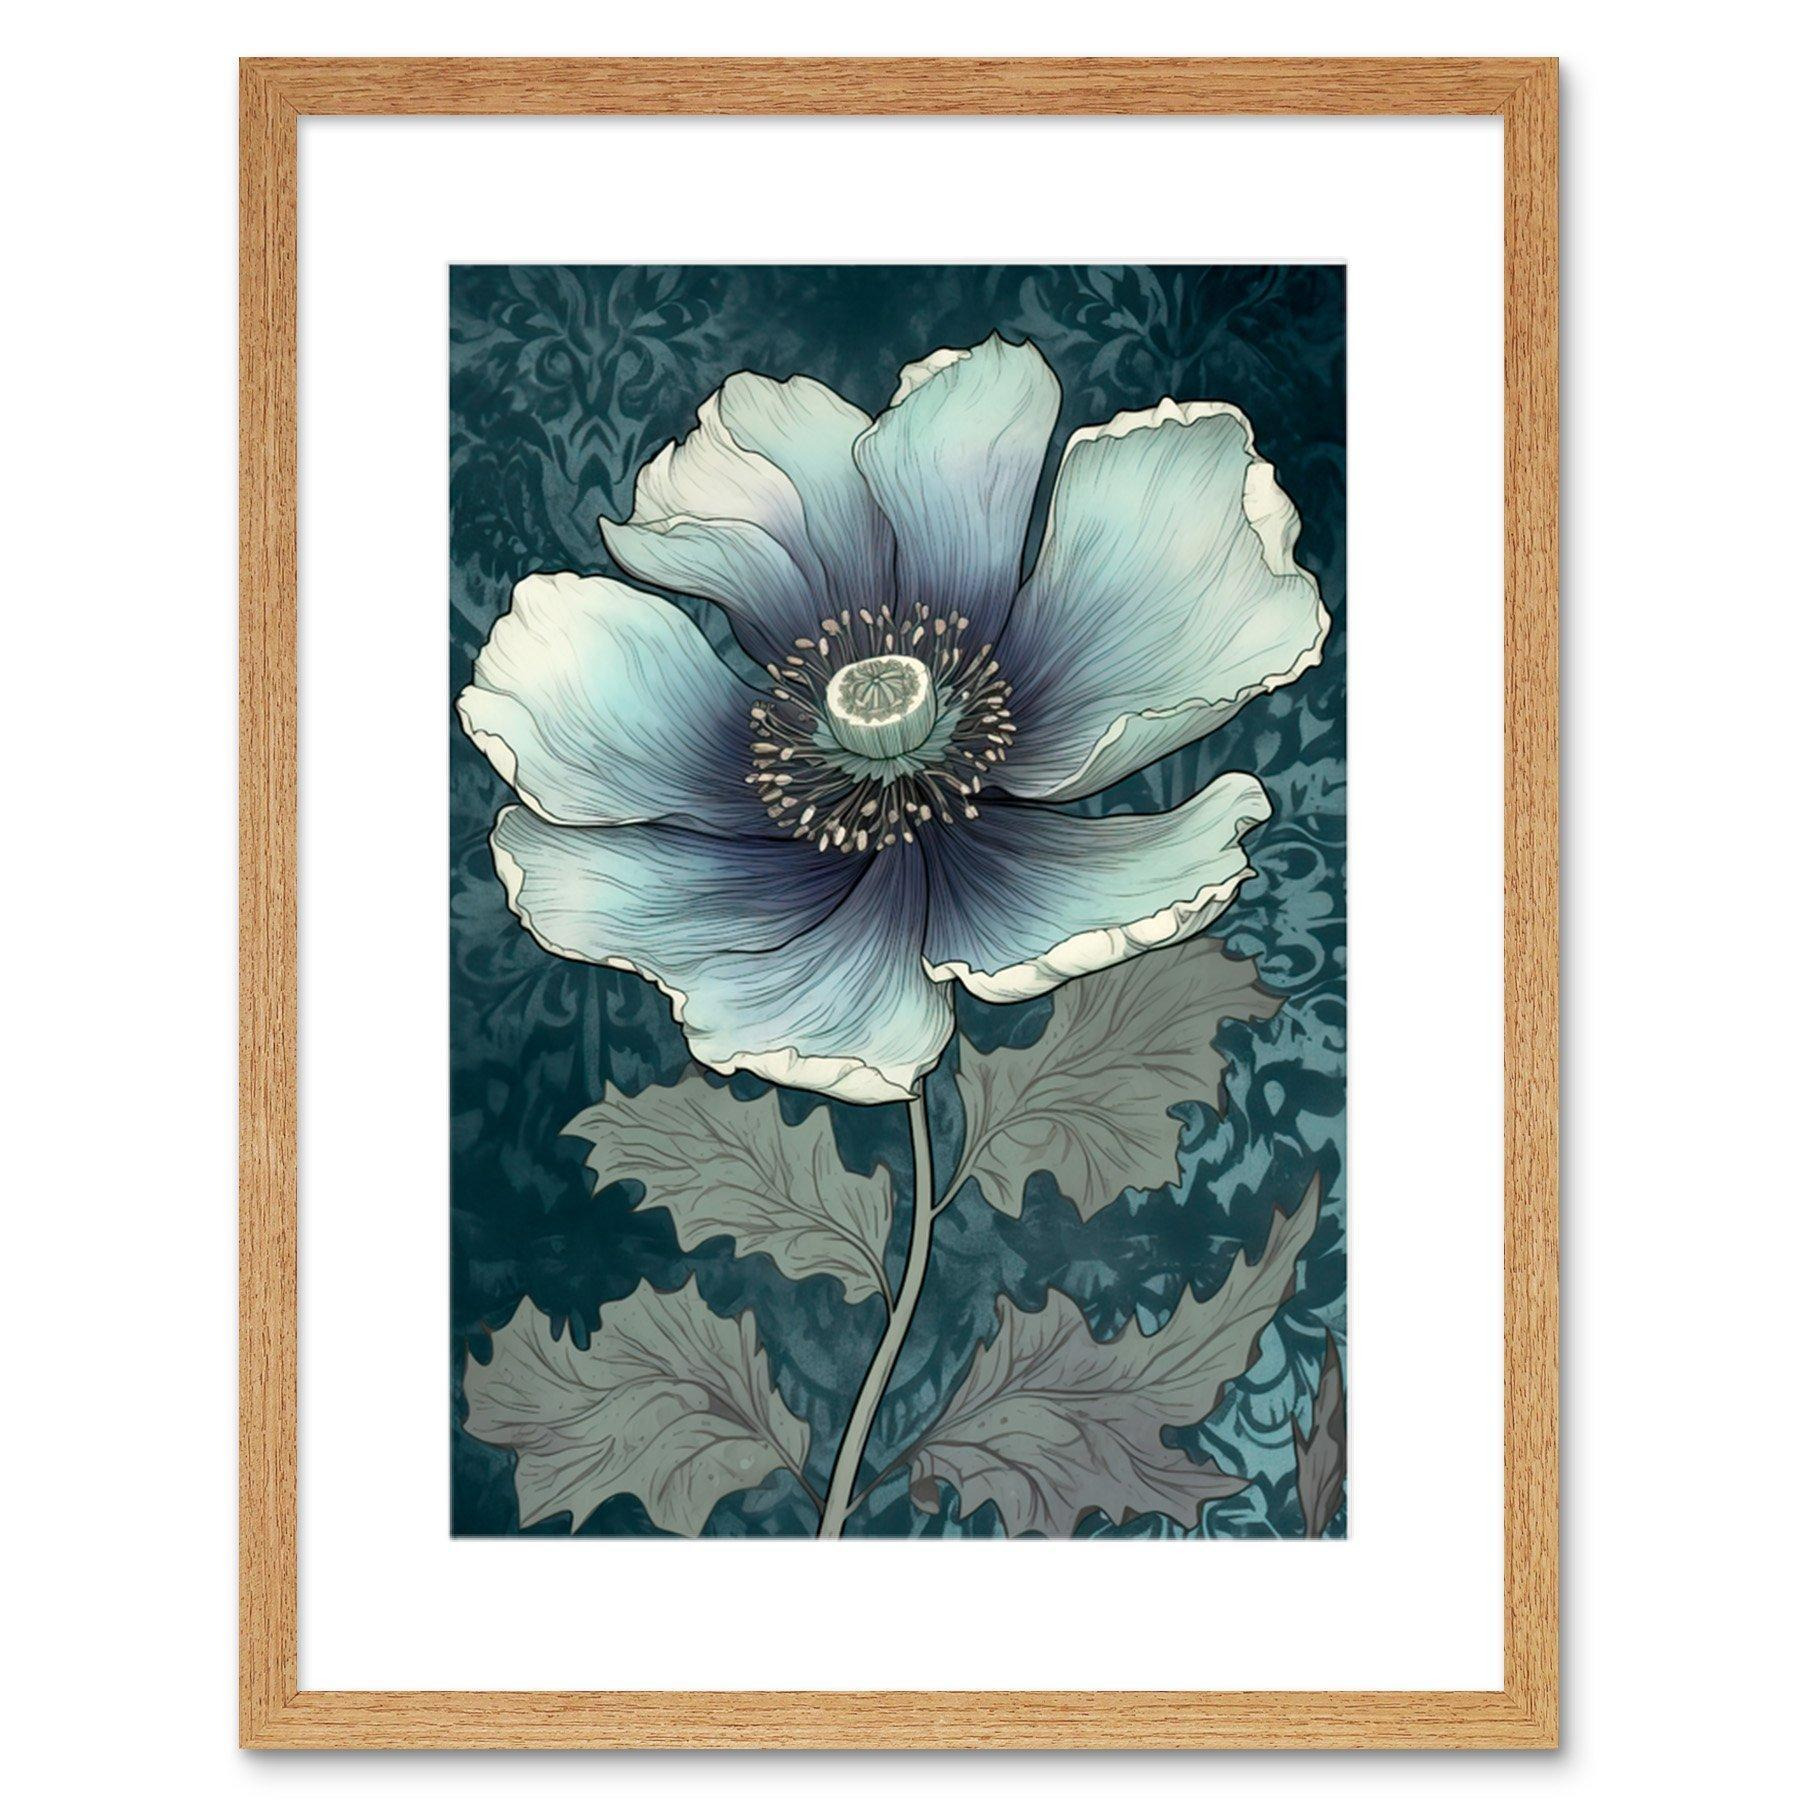 Wall Art Print Anemone Flower Bloom Teal Blue Watercolour Artwork Framed 9X7 Inch - image 1